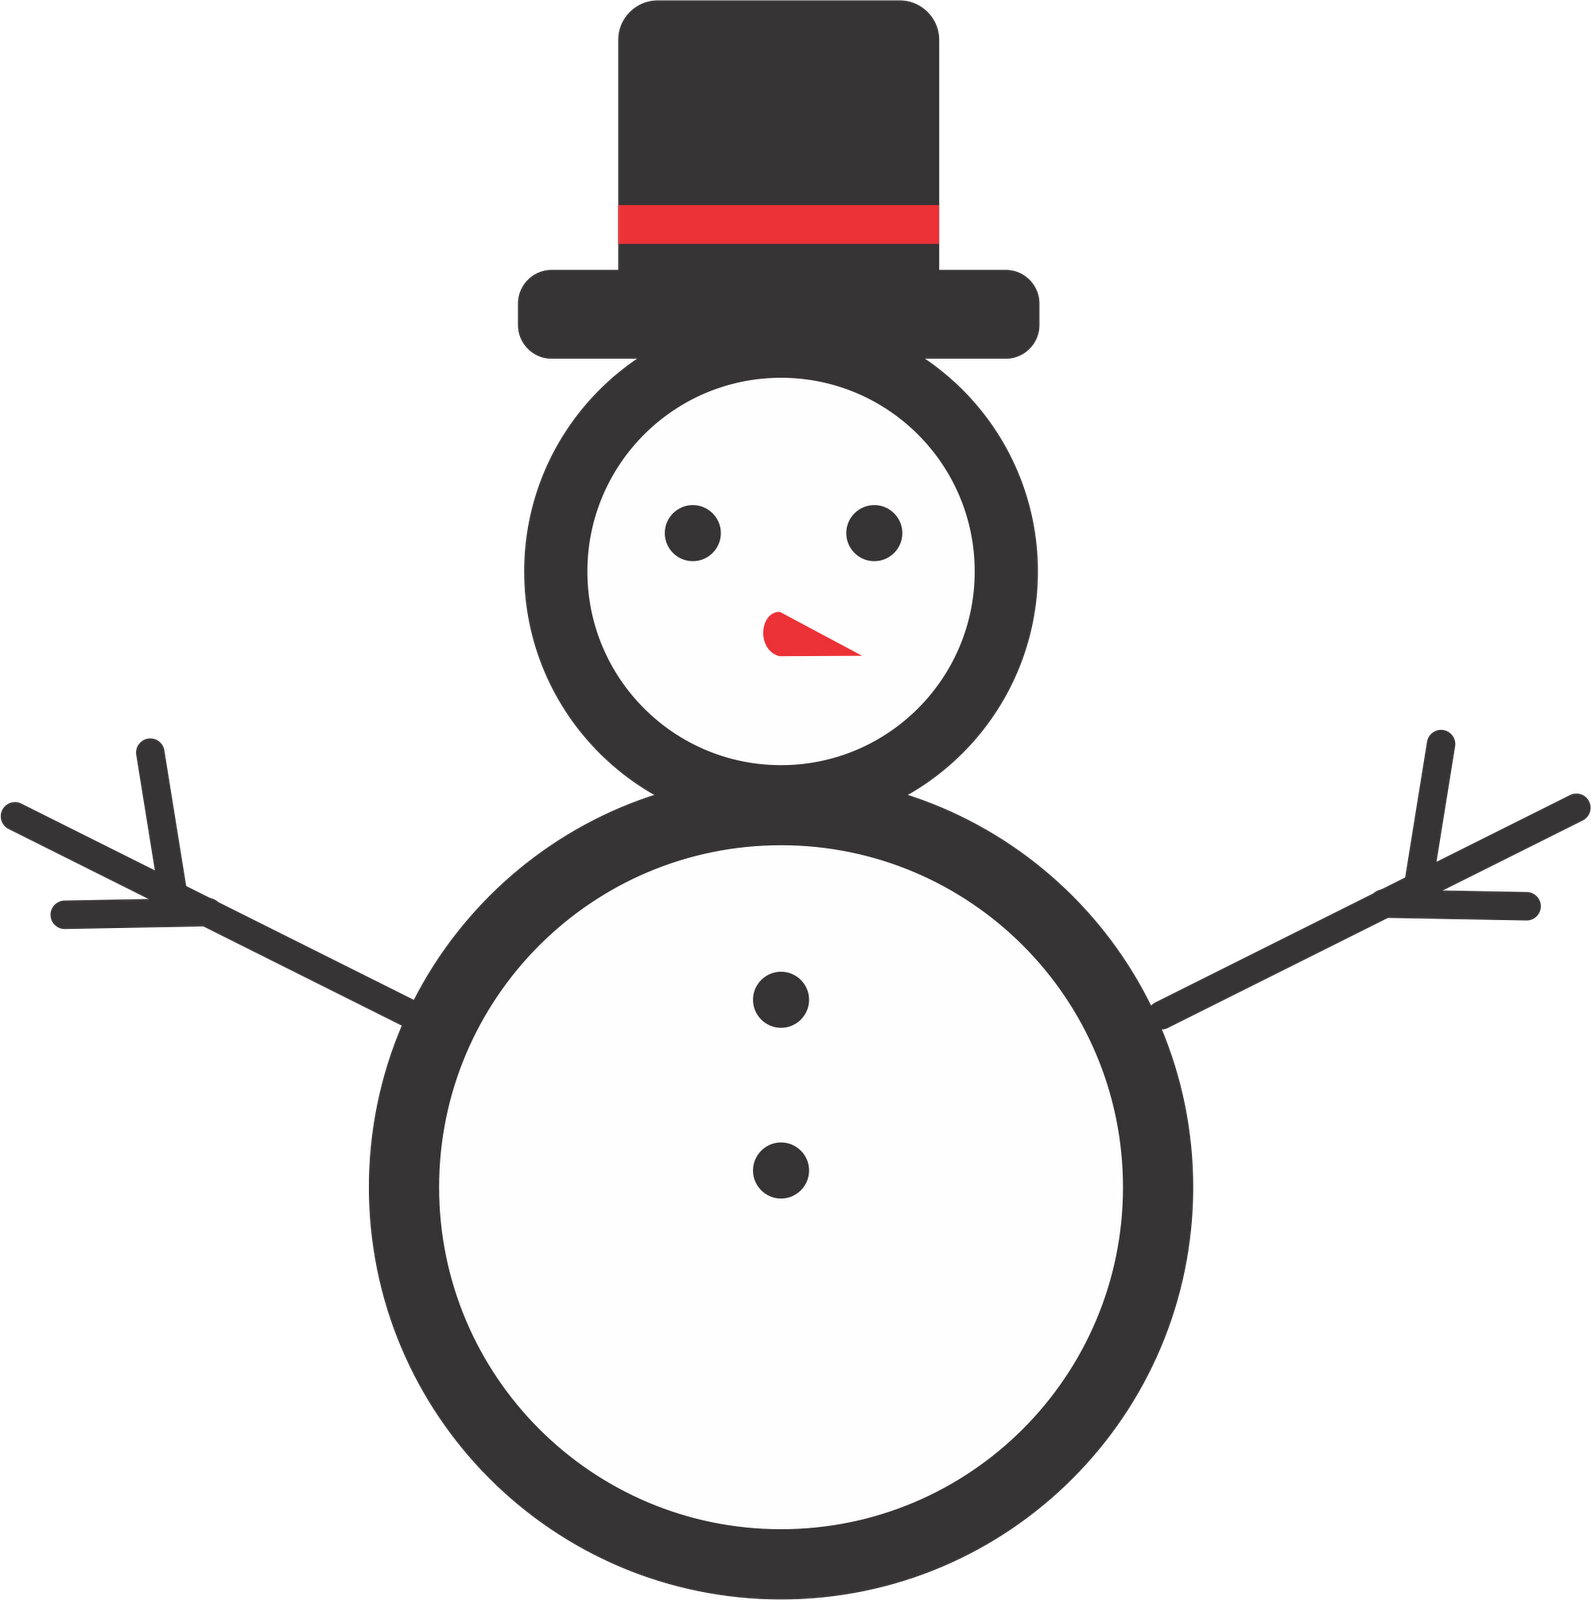 Snowman Illustrator For Christmas Holidays - Sanskrit (1591x1600)